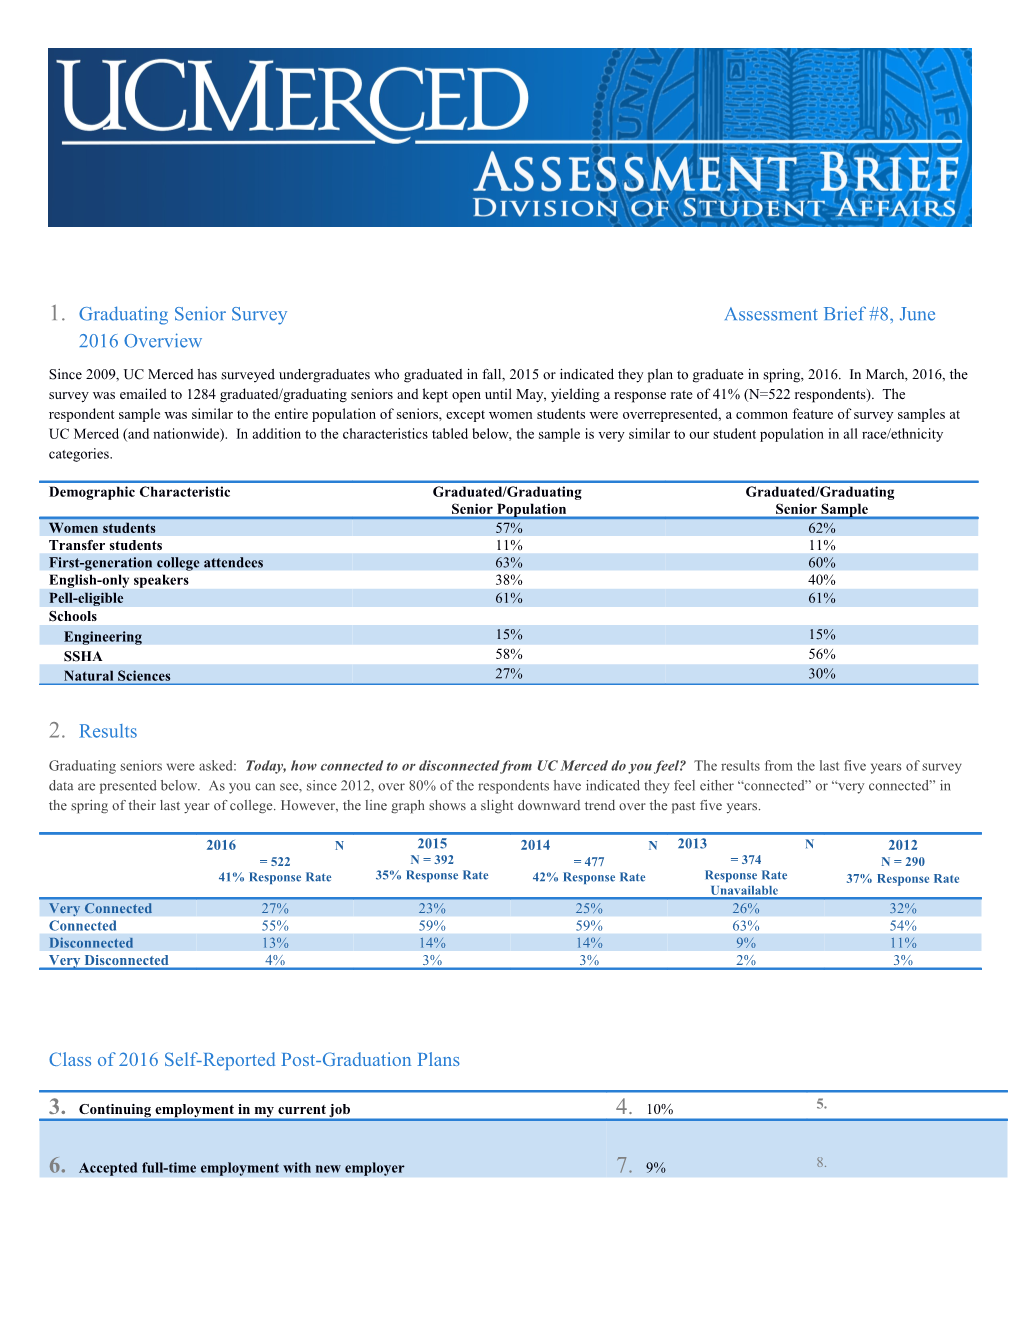 Graduating Senior Survey Assessment Brief #8, June 2016 Overview